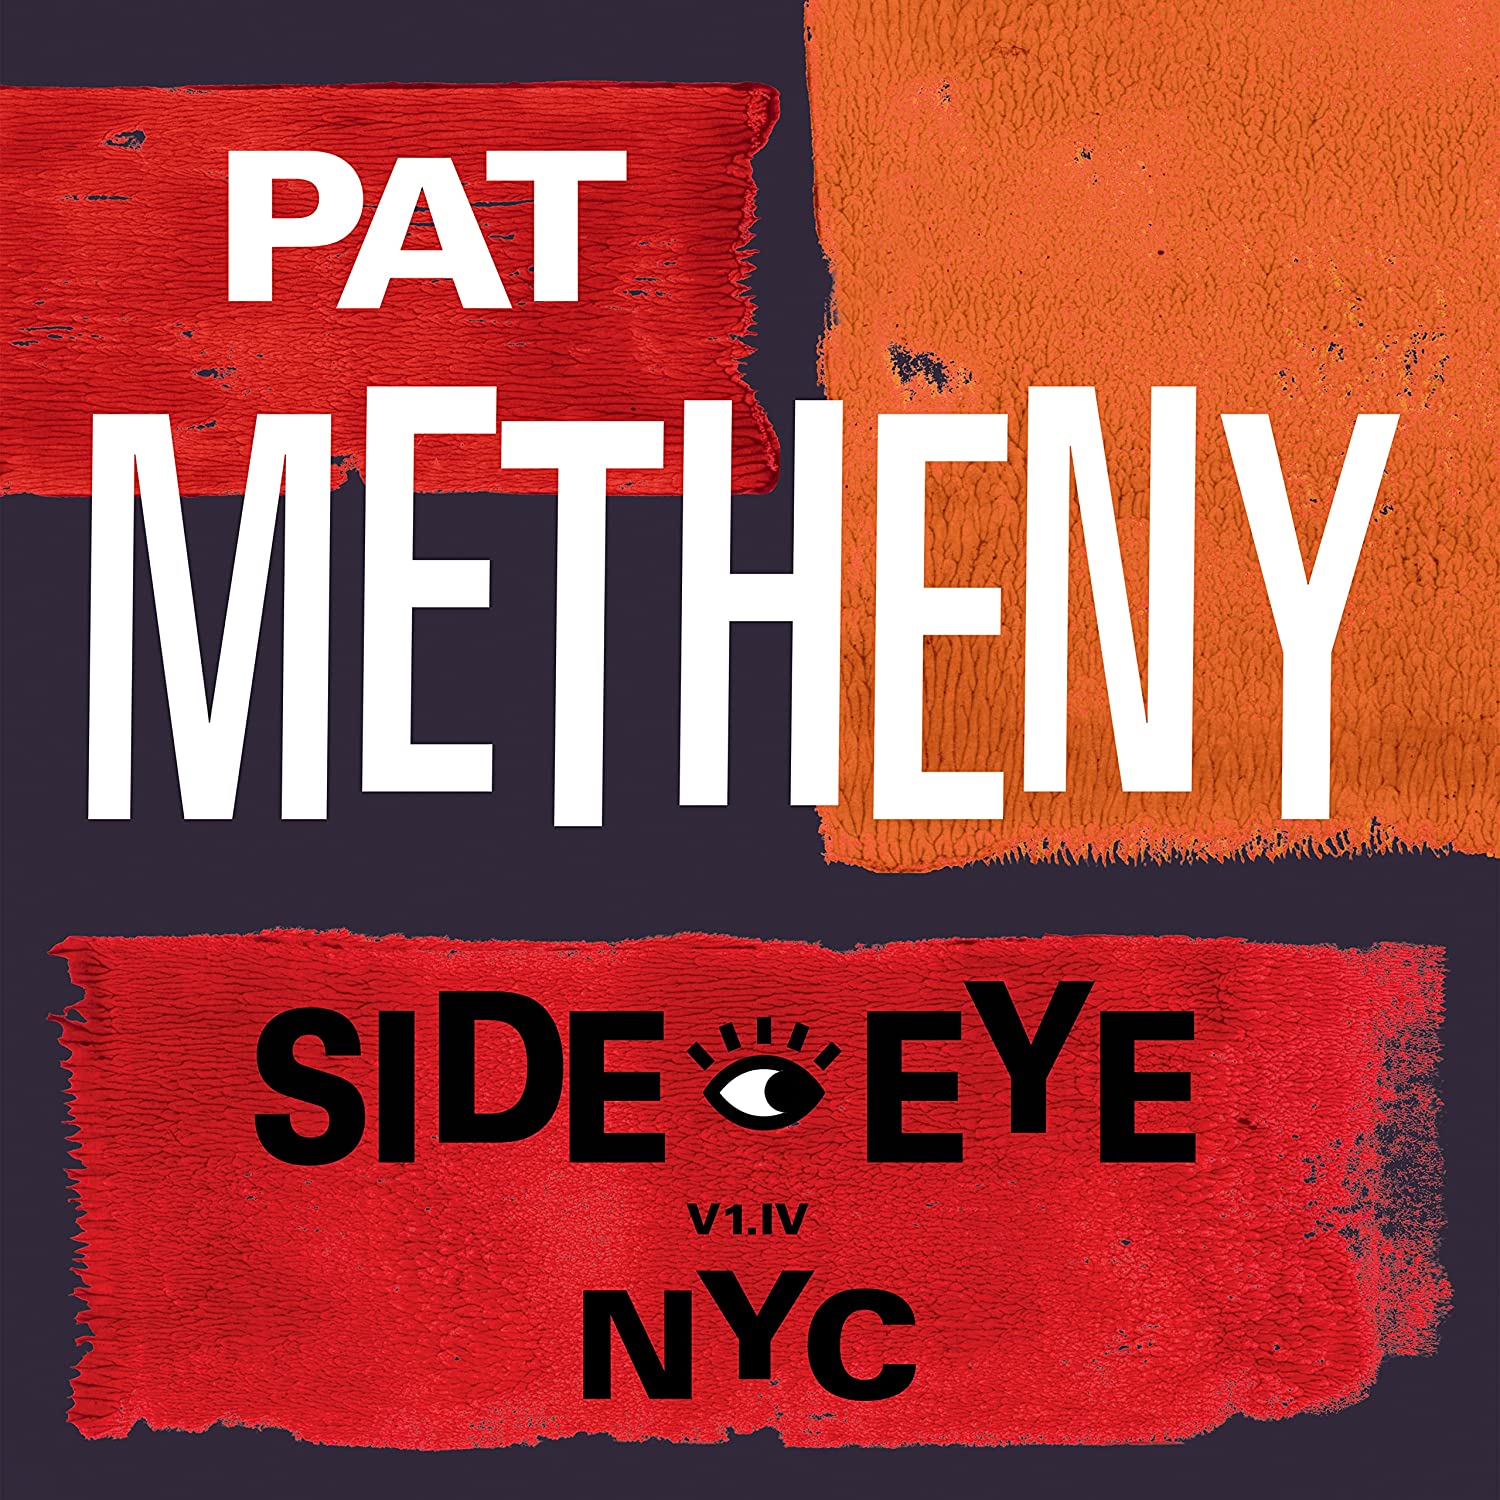 Copertina Vinile 33 giri Side Eye Nyc di Pat Metheny